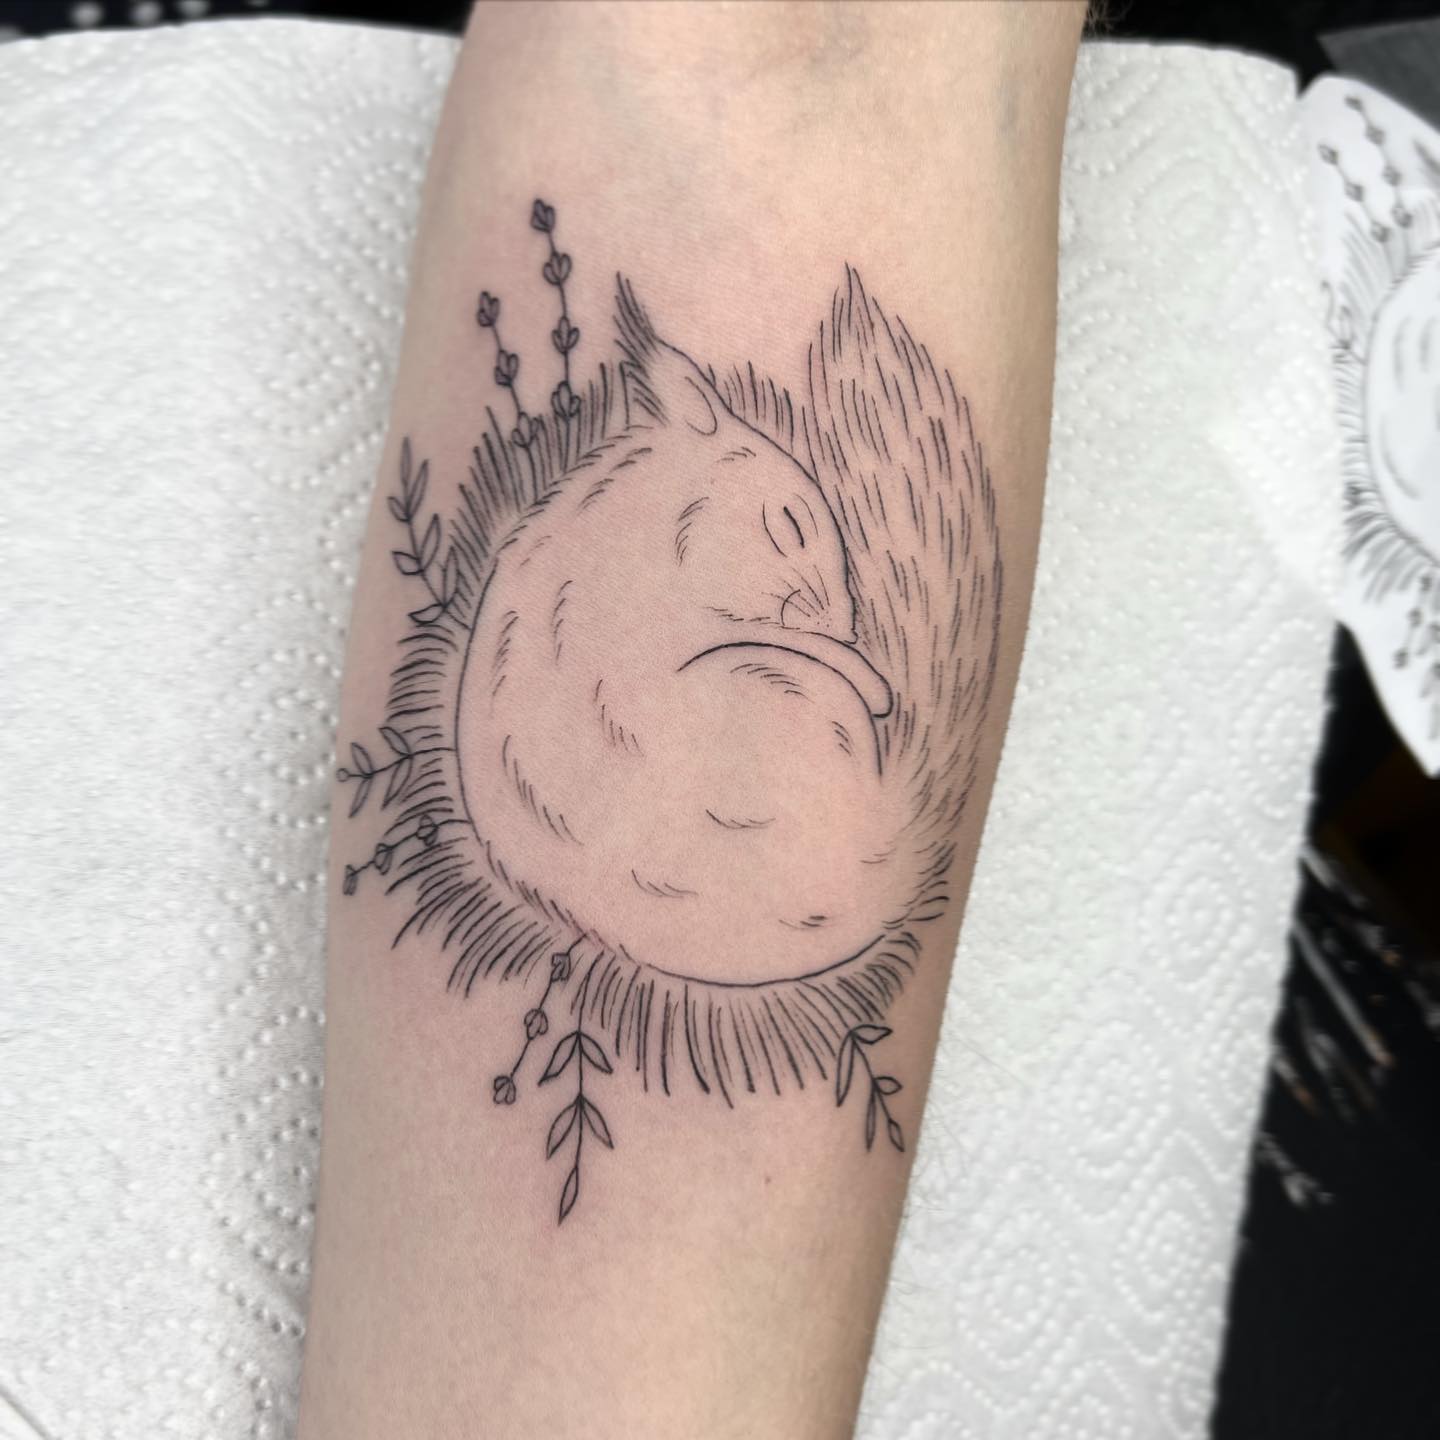 Sleeping squirrel tattoo by atelier rosengarten